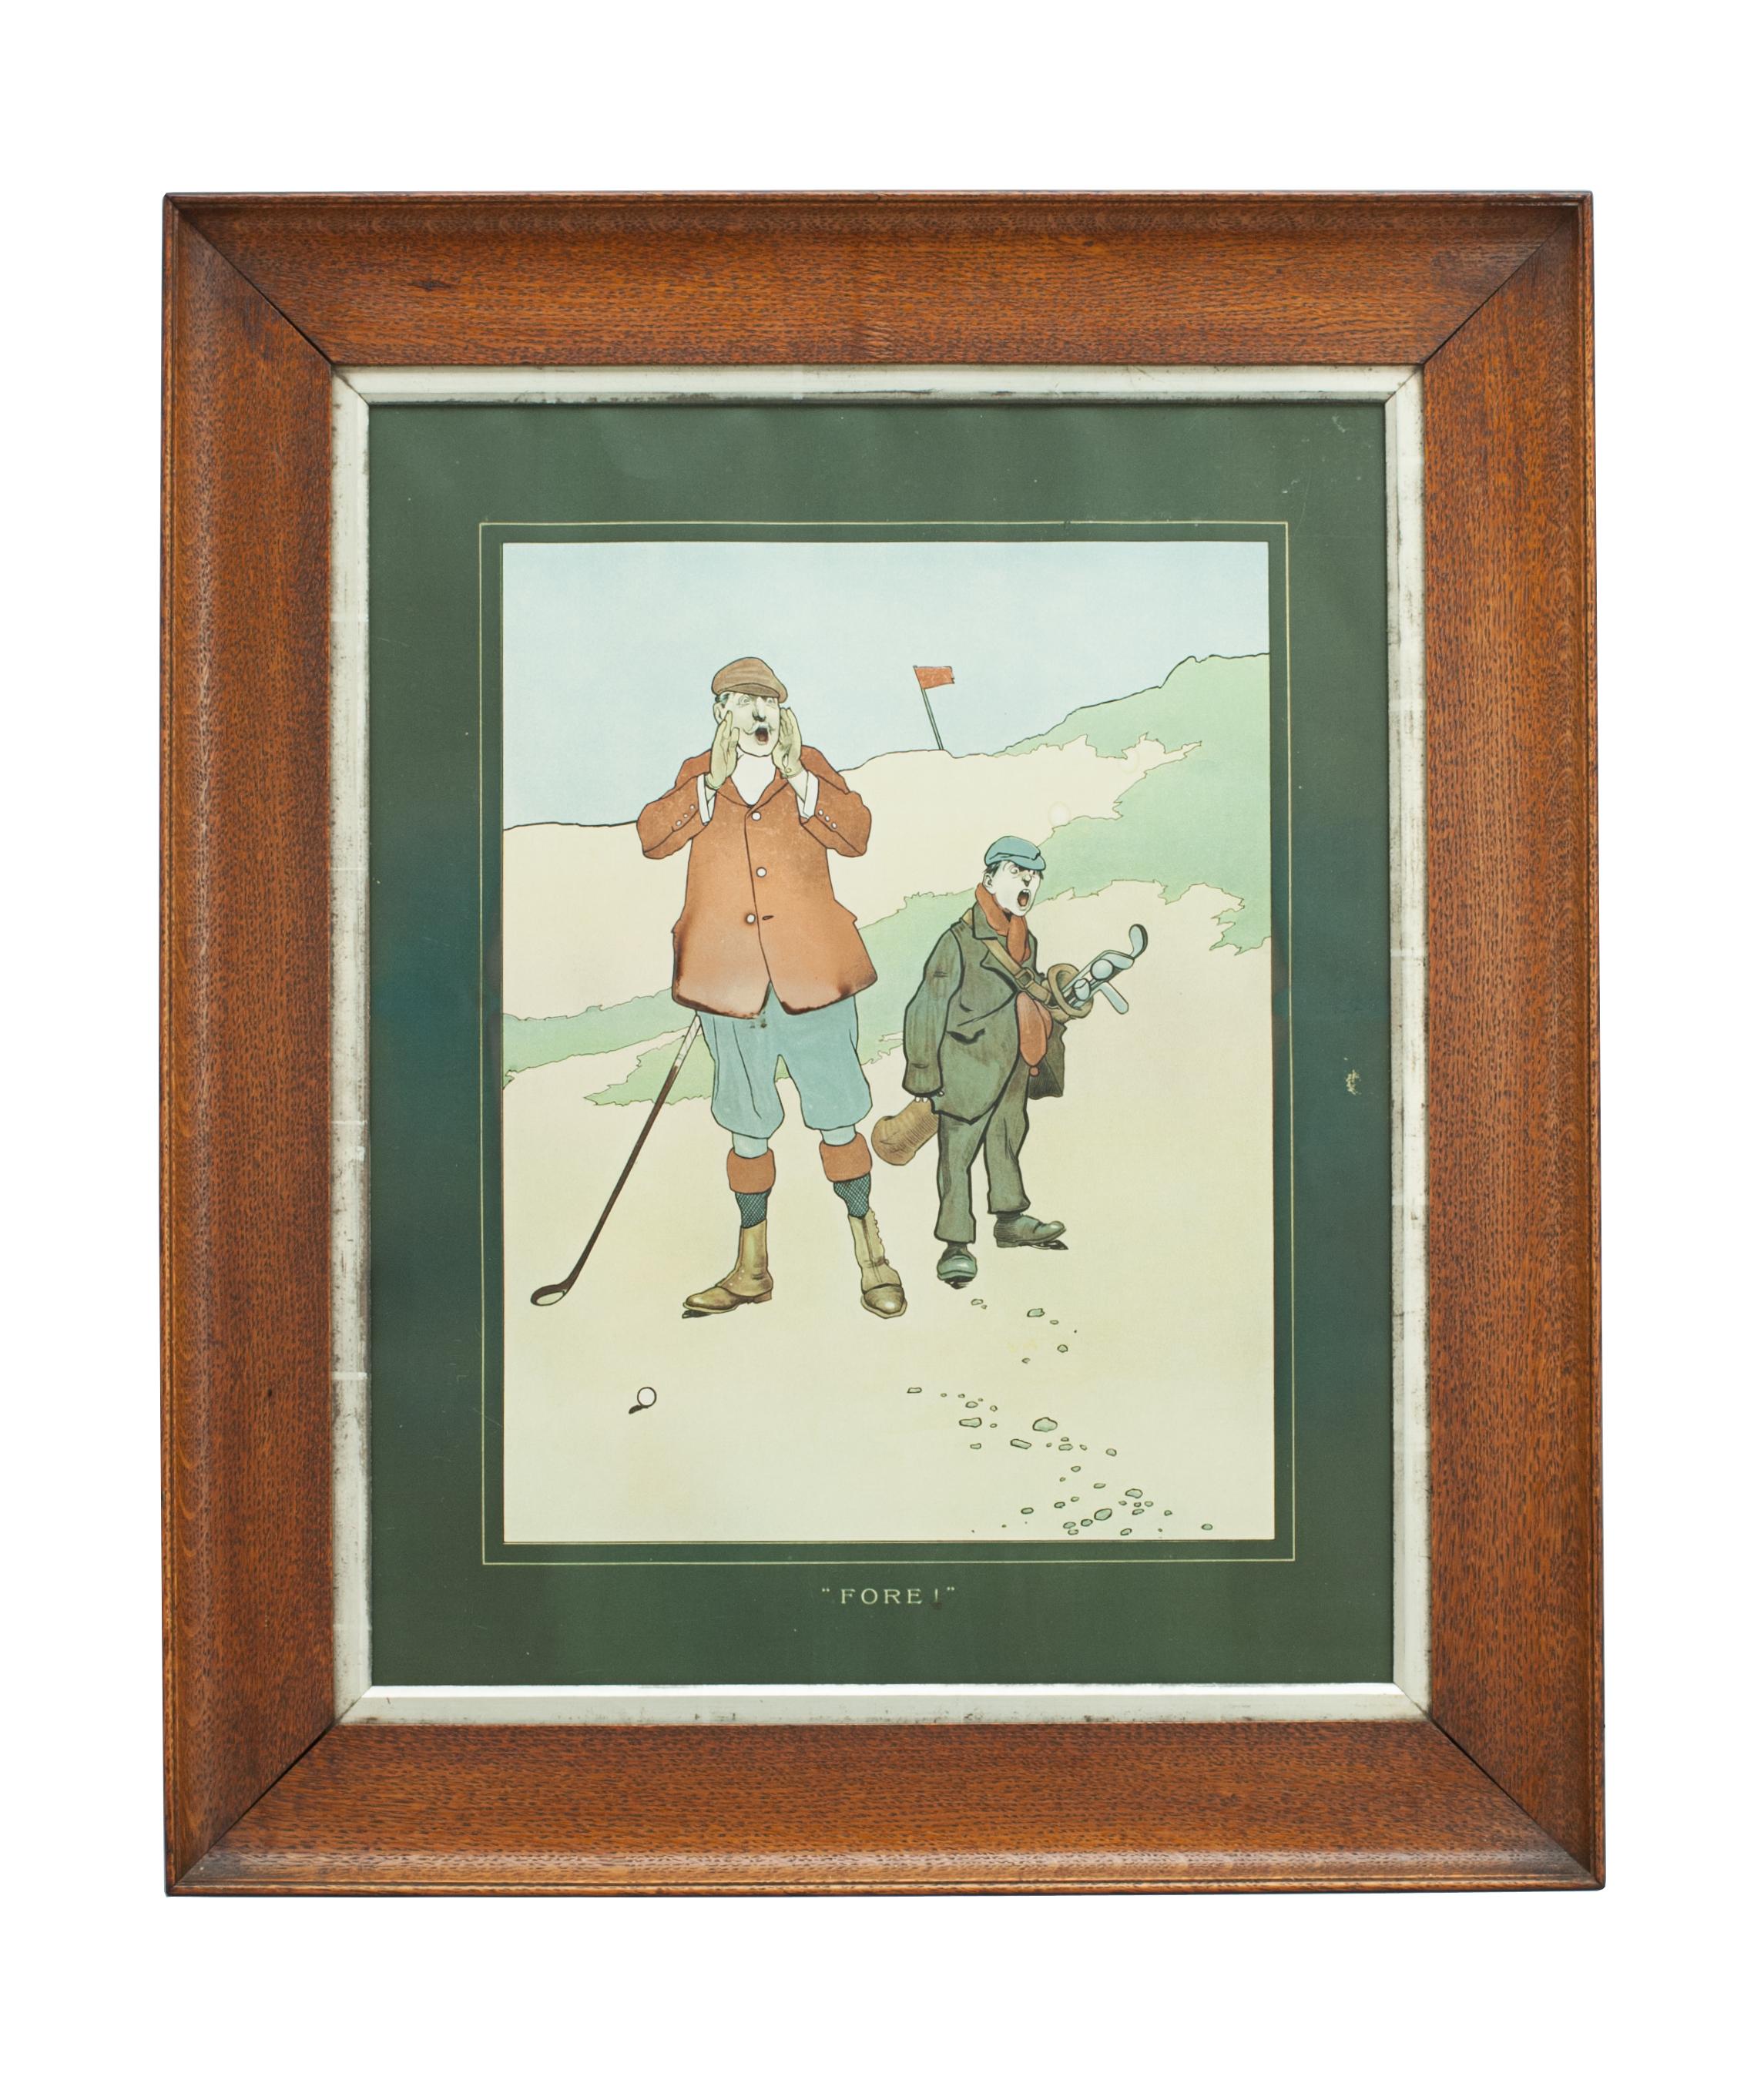 Sporting Art John Hassall Golf Prints